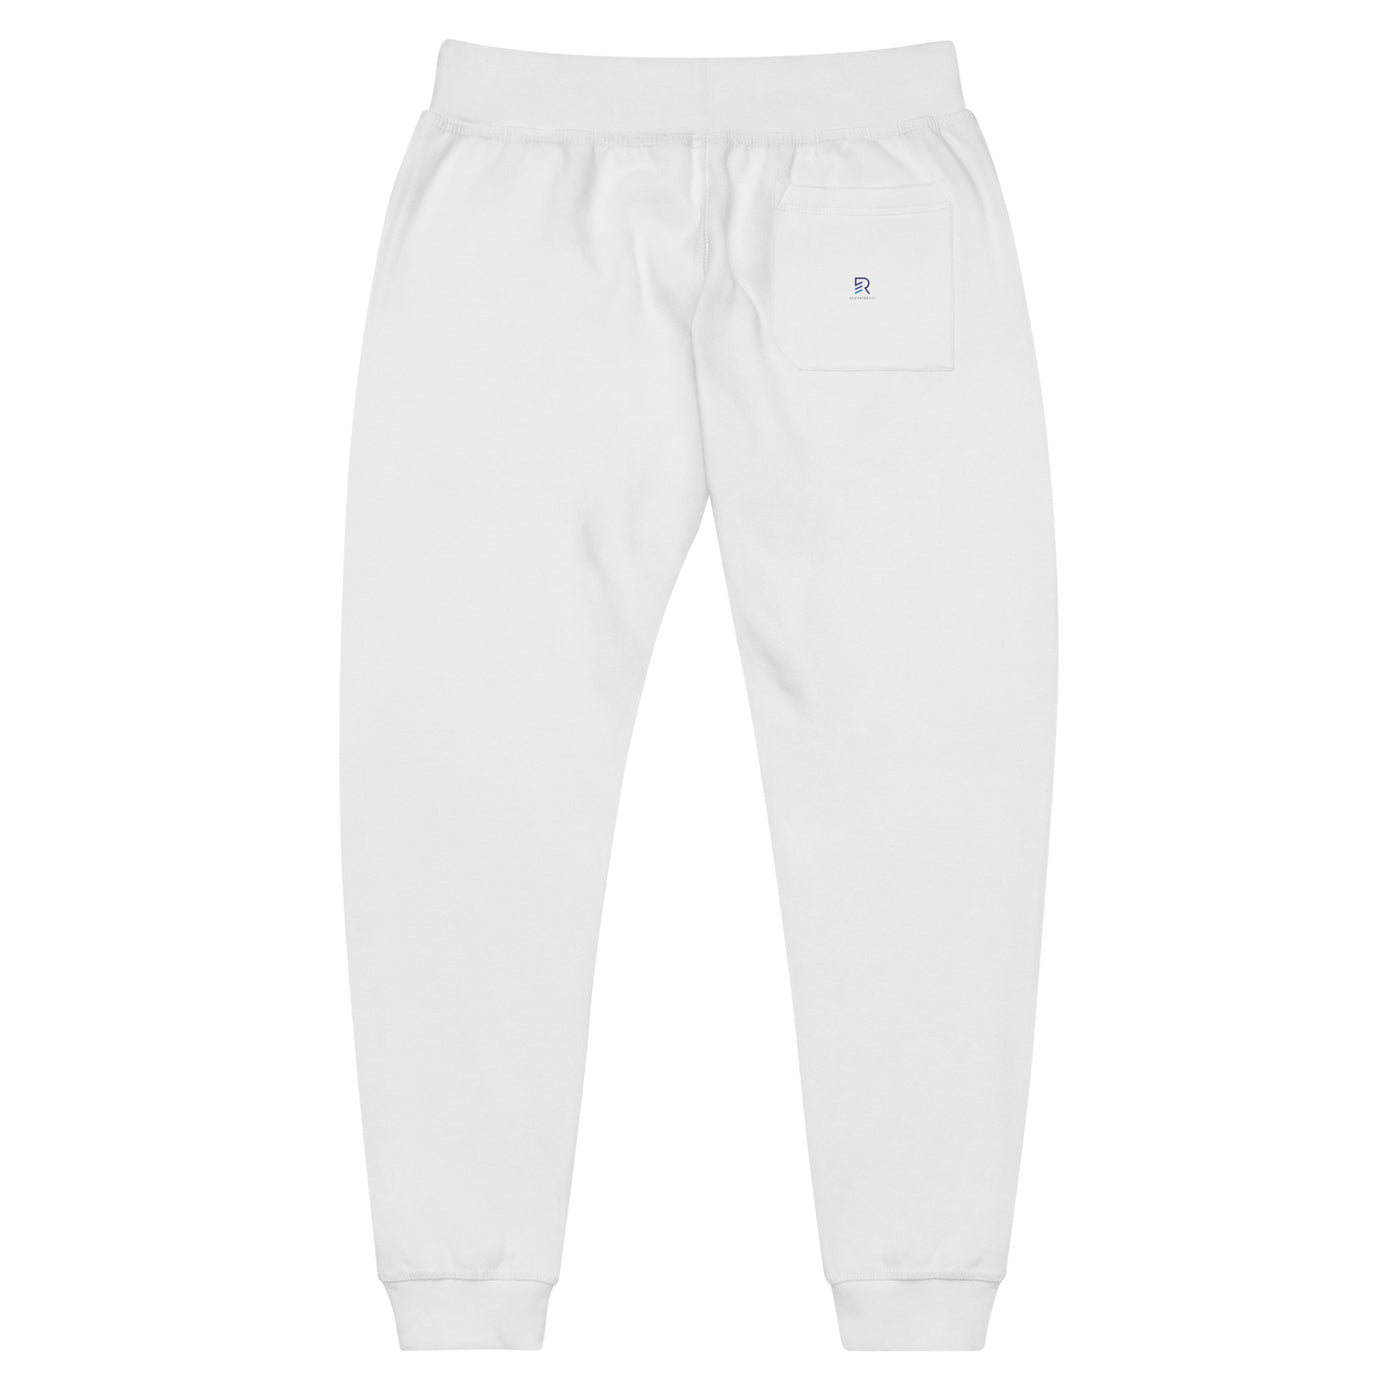 Men's White Fleece Sweatpants - Stay Focus Get It Done